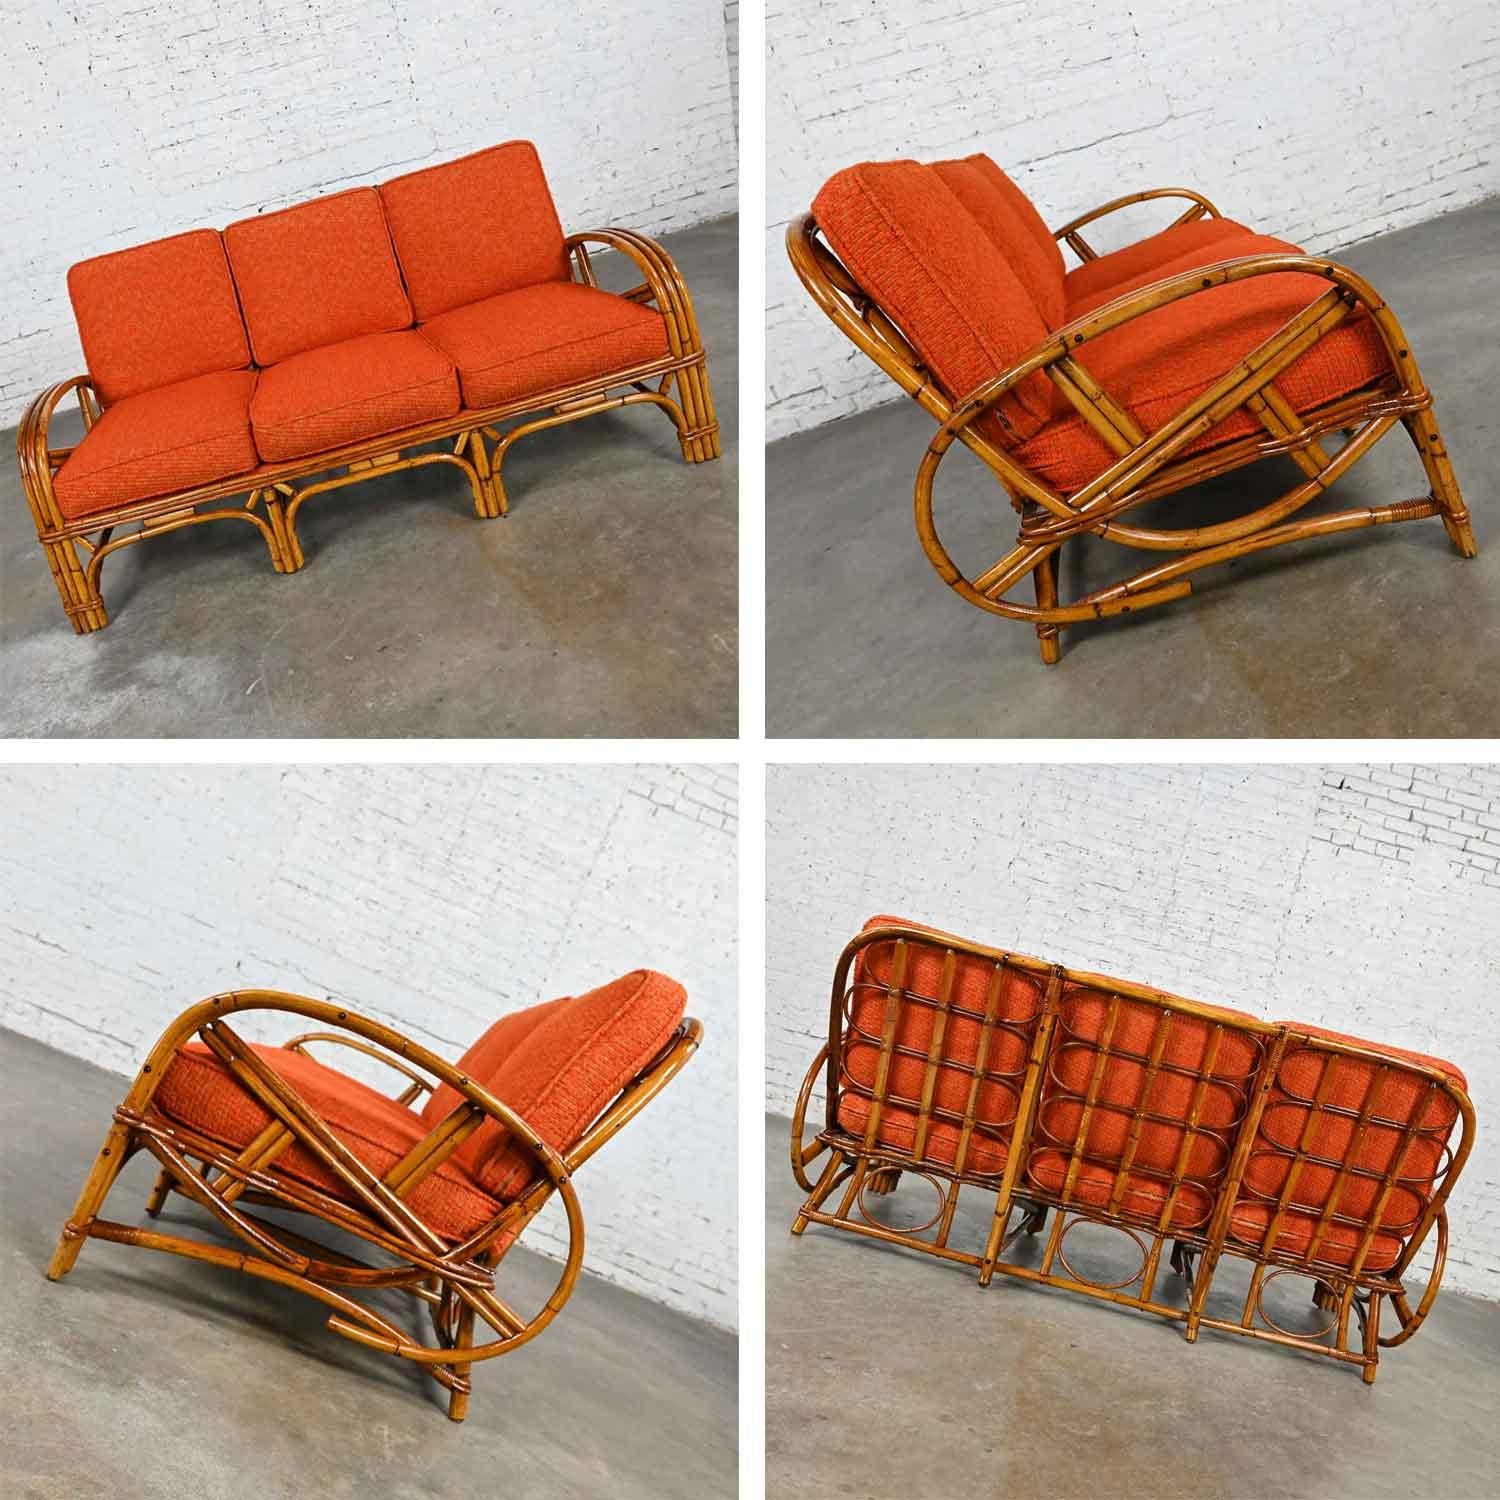 Triple Strand Rattan Sofa & Chair Orange Fabric Cushions Style Heywood Wakefield For Sale 7